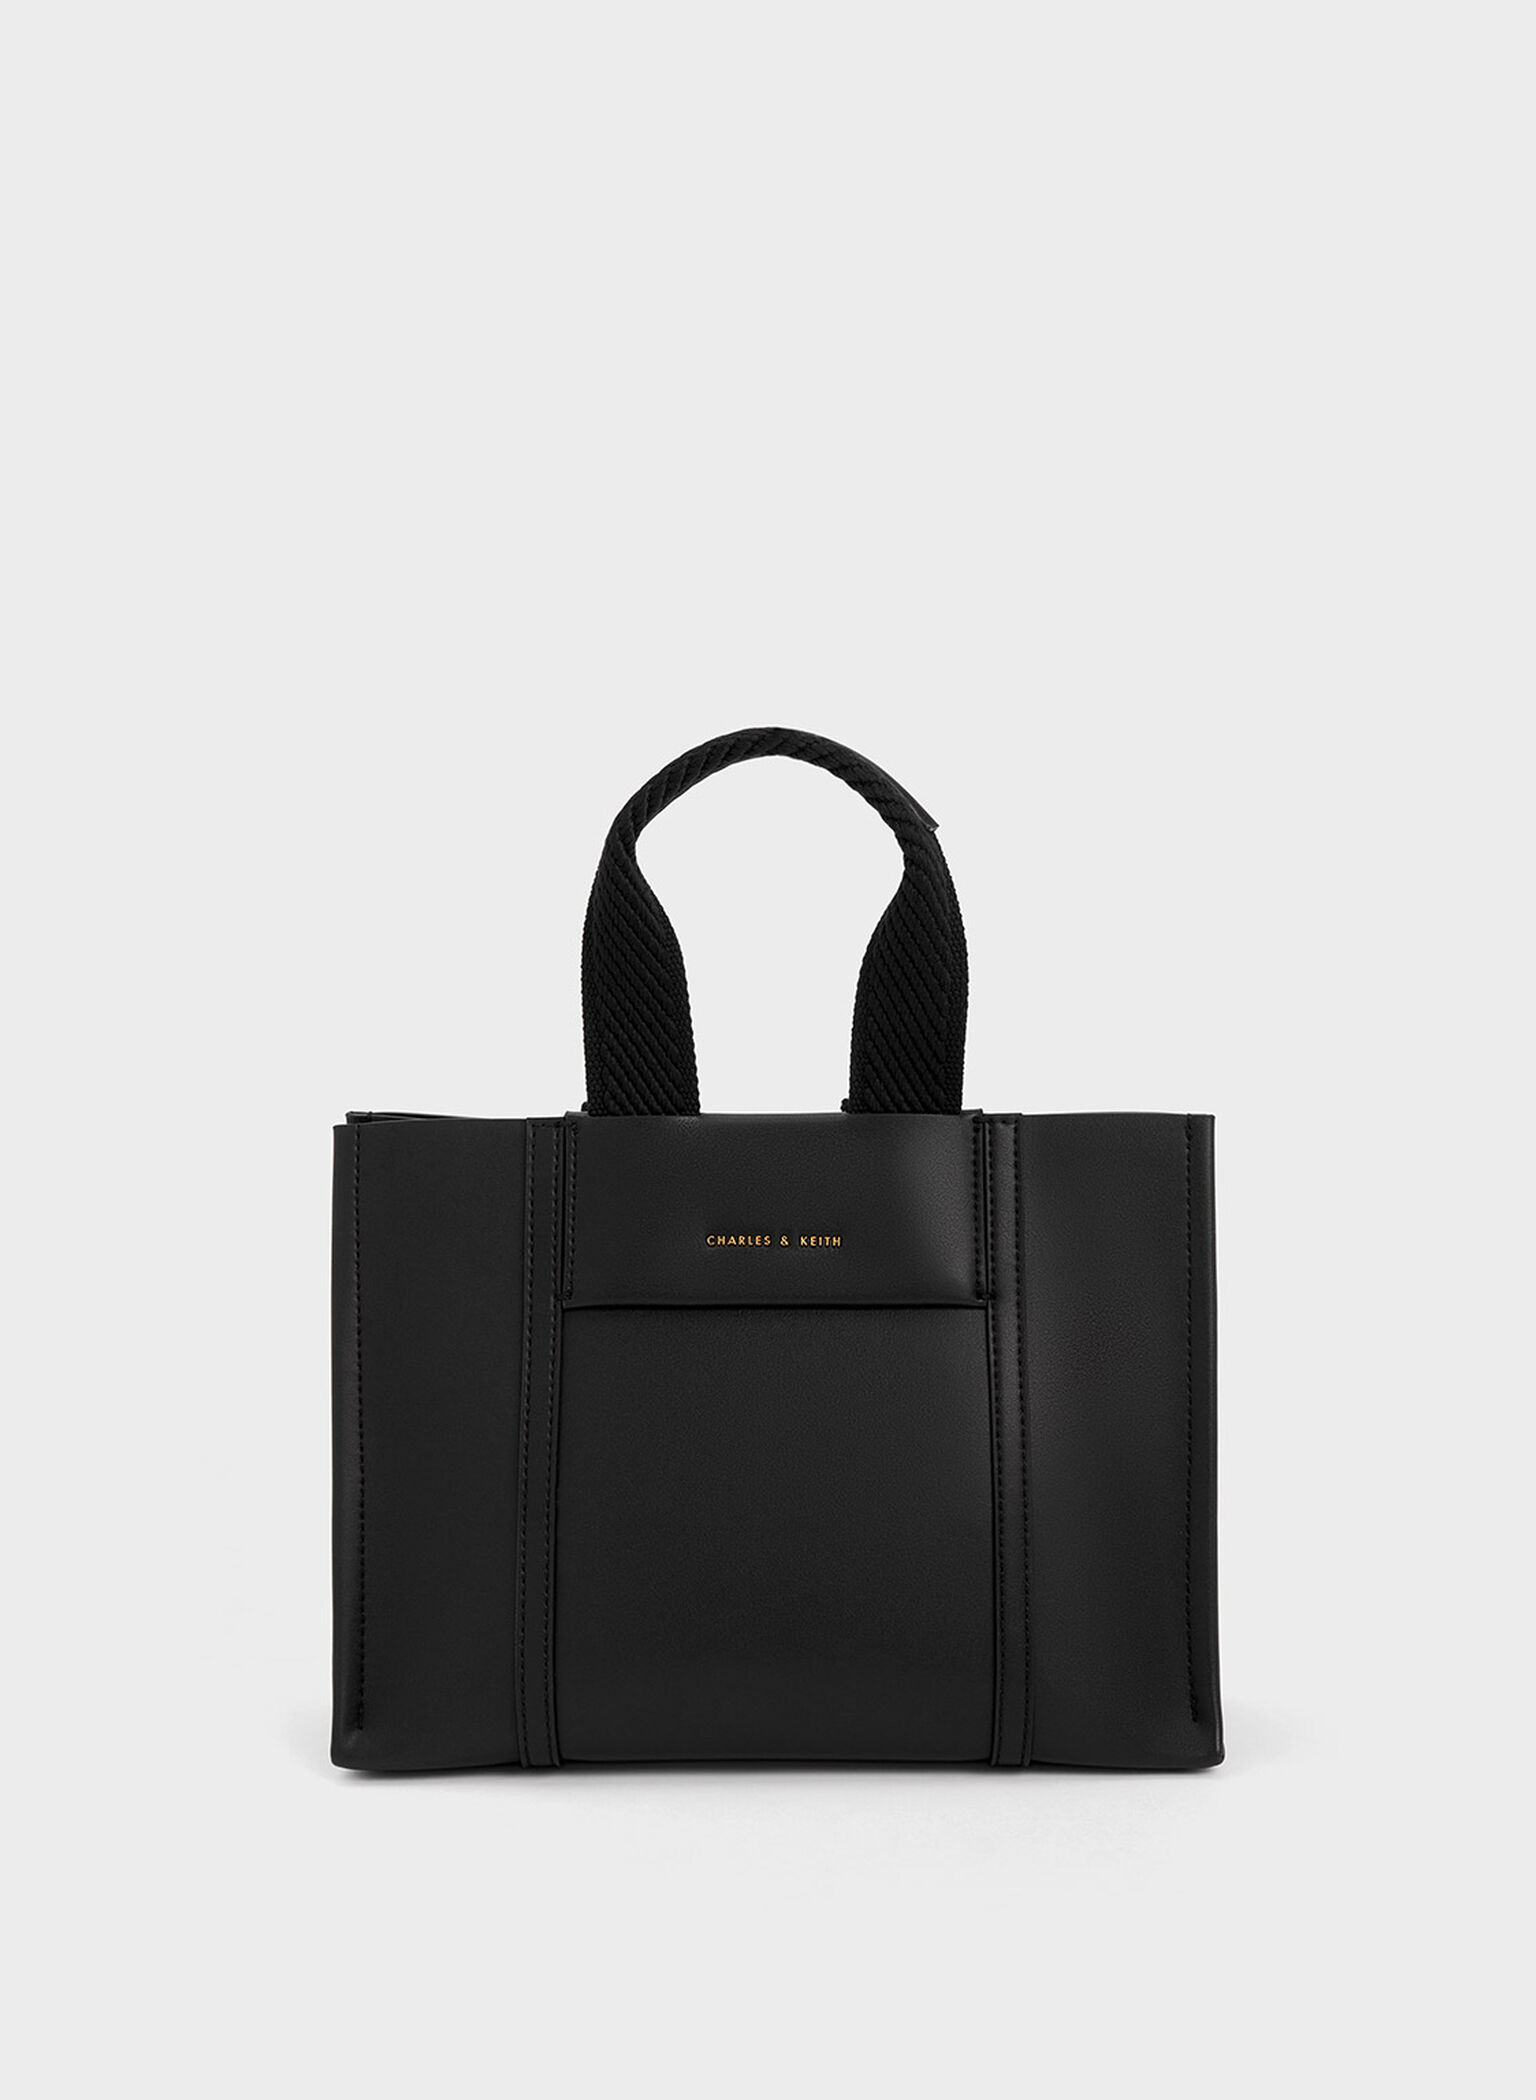 Quilted Black Handbag Faux Leather Ladies Shoulder Bag -  Ireland